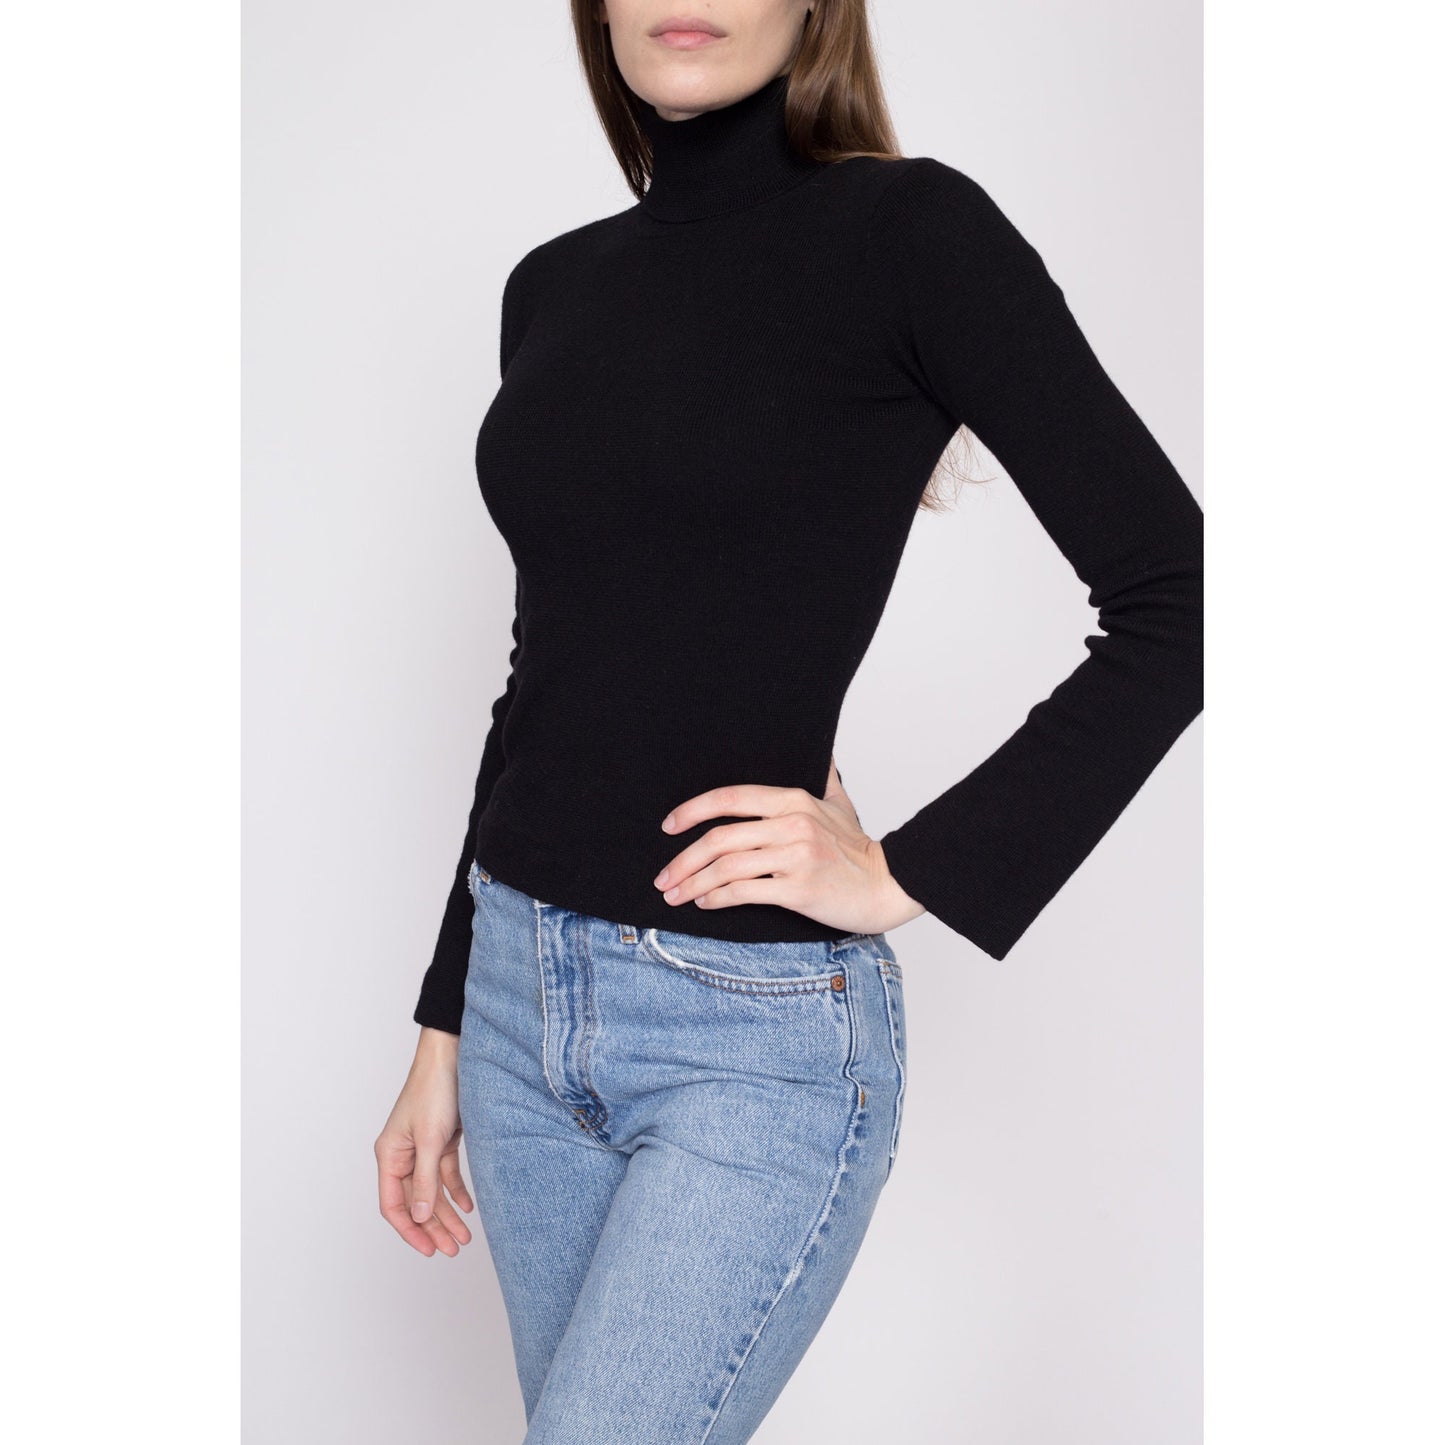 90s Banana Republic Merino Wool Turtleneck - Small | Vintage Bell Sleeve Minimalist Black Fitted Sweater